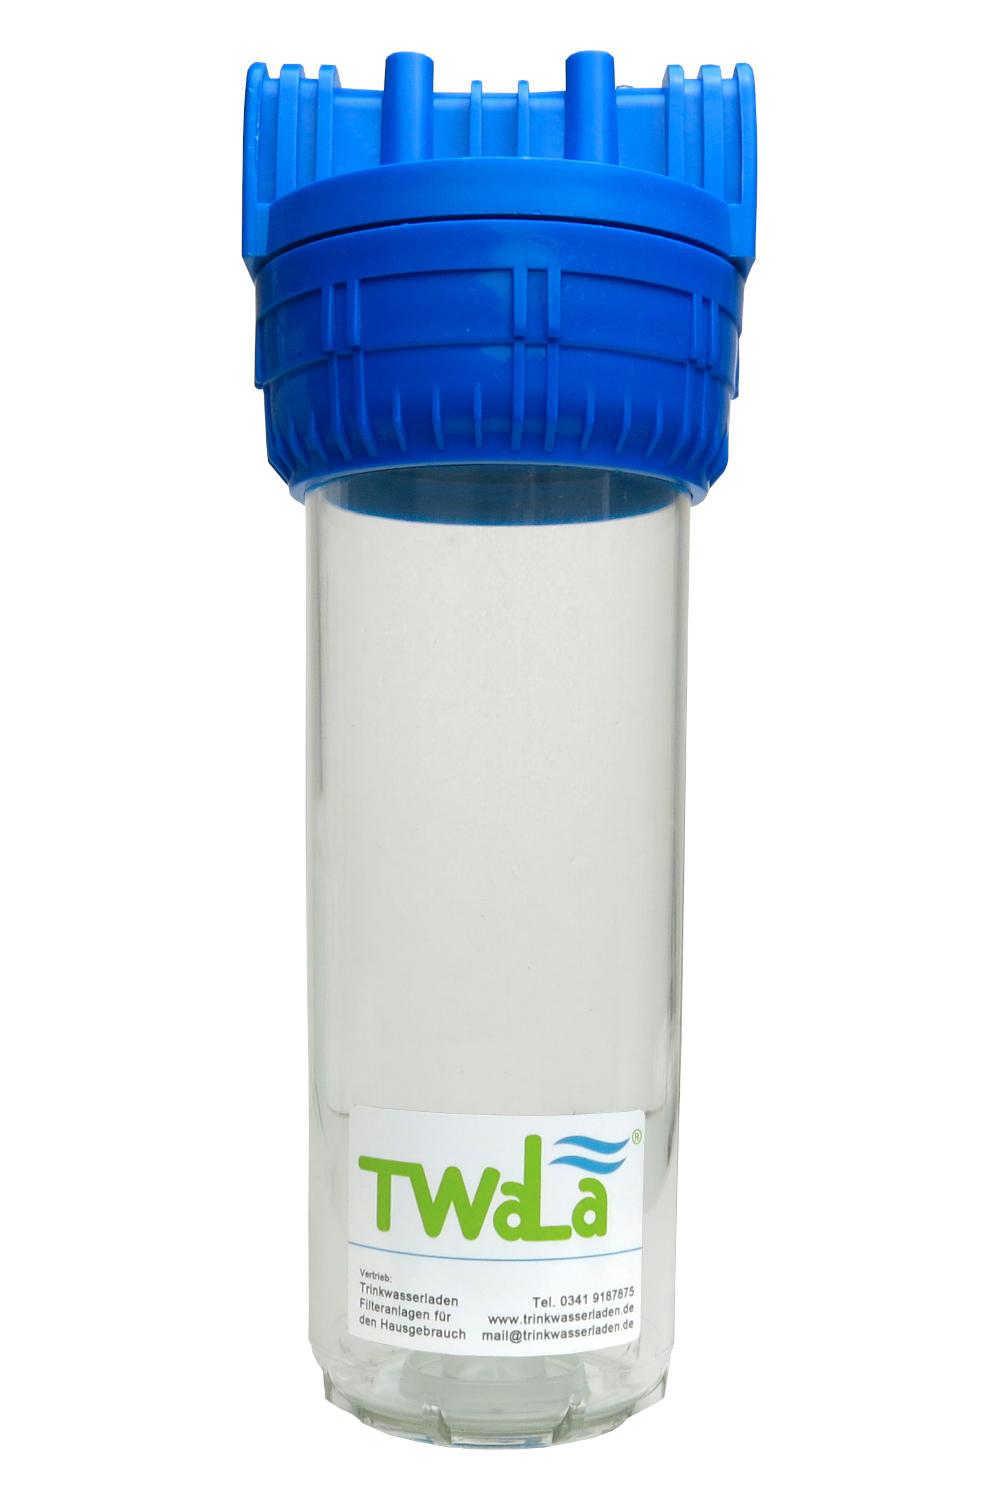 TWaLa Wasserfilter Gehäuse 3/4" Messing Anschluss transparent blau für 10" Filterpatronen